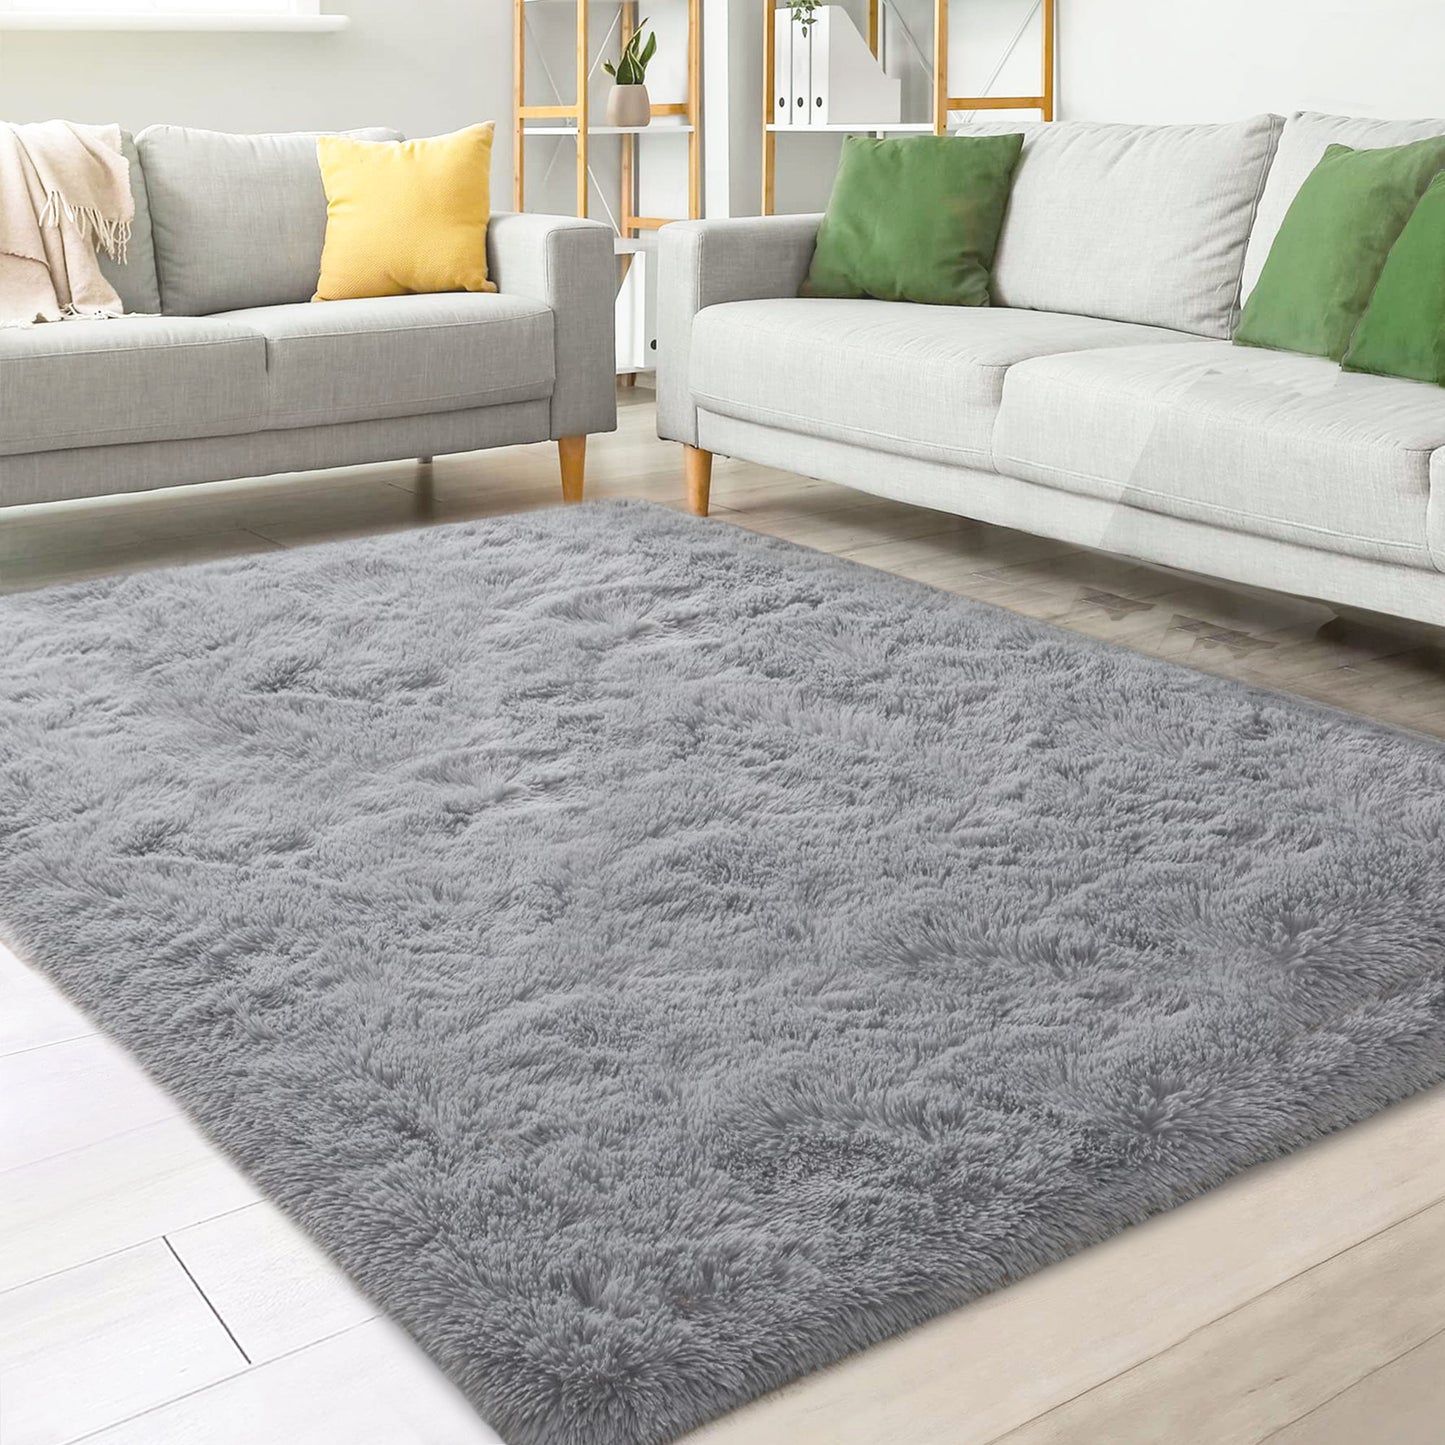 Nefoso Shag Light Gray Area Rug, Soft Fluffy Area Rugs for Living Room Bedroom Kids Room Decor Carpet